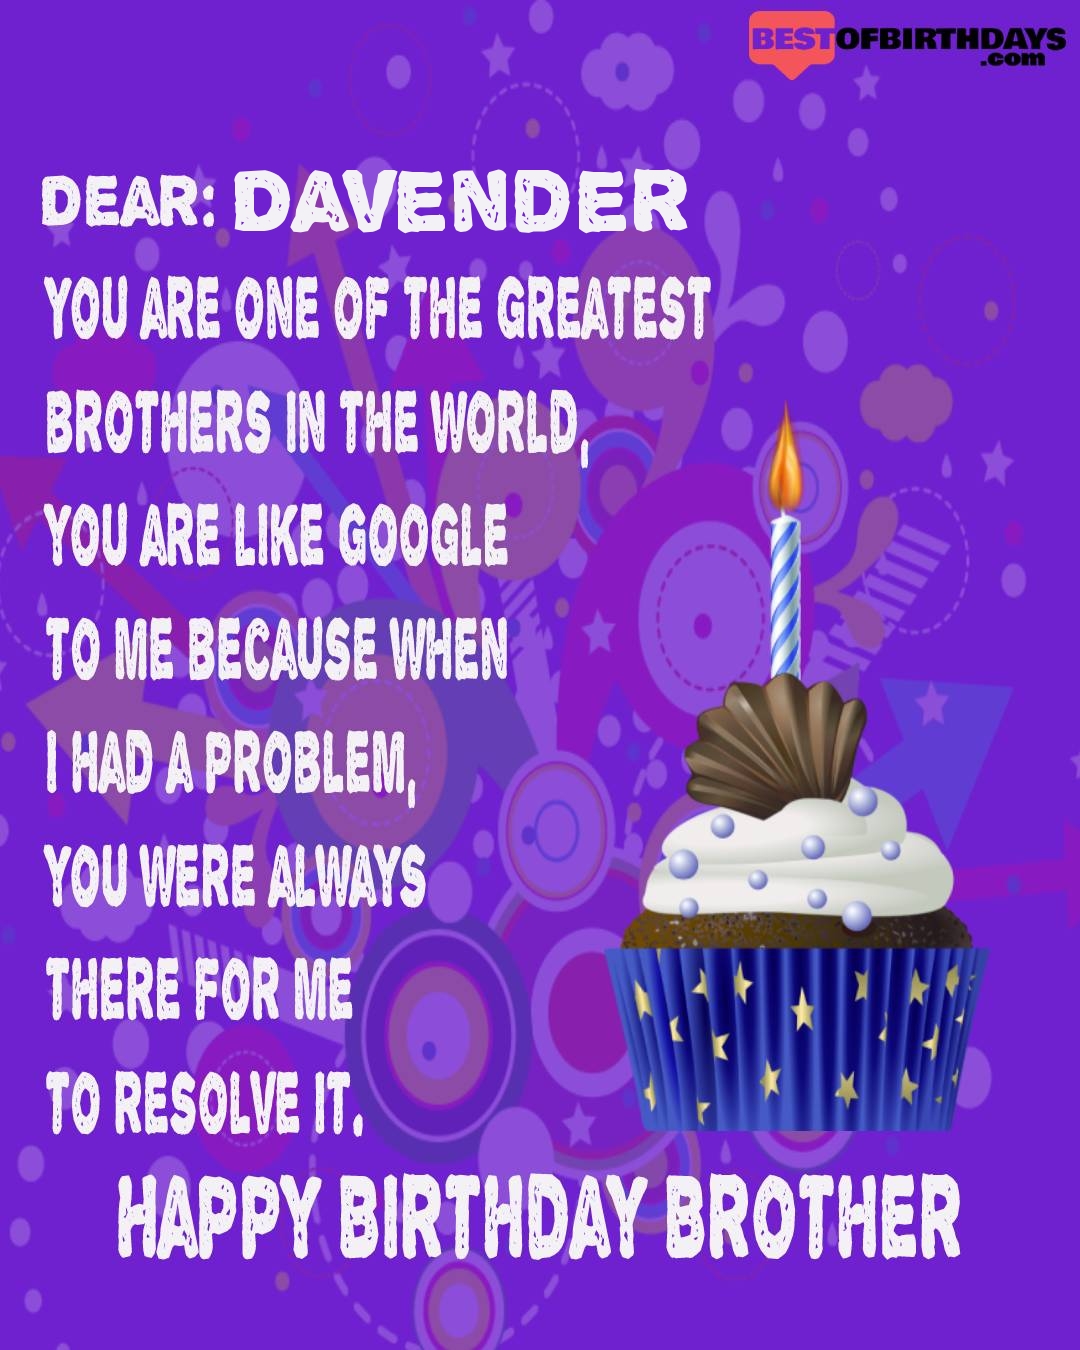 Happy birthday davender bhai brother bro